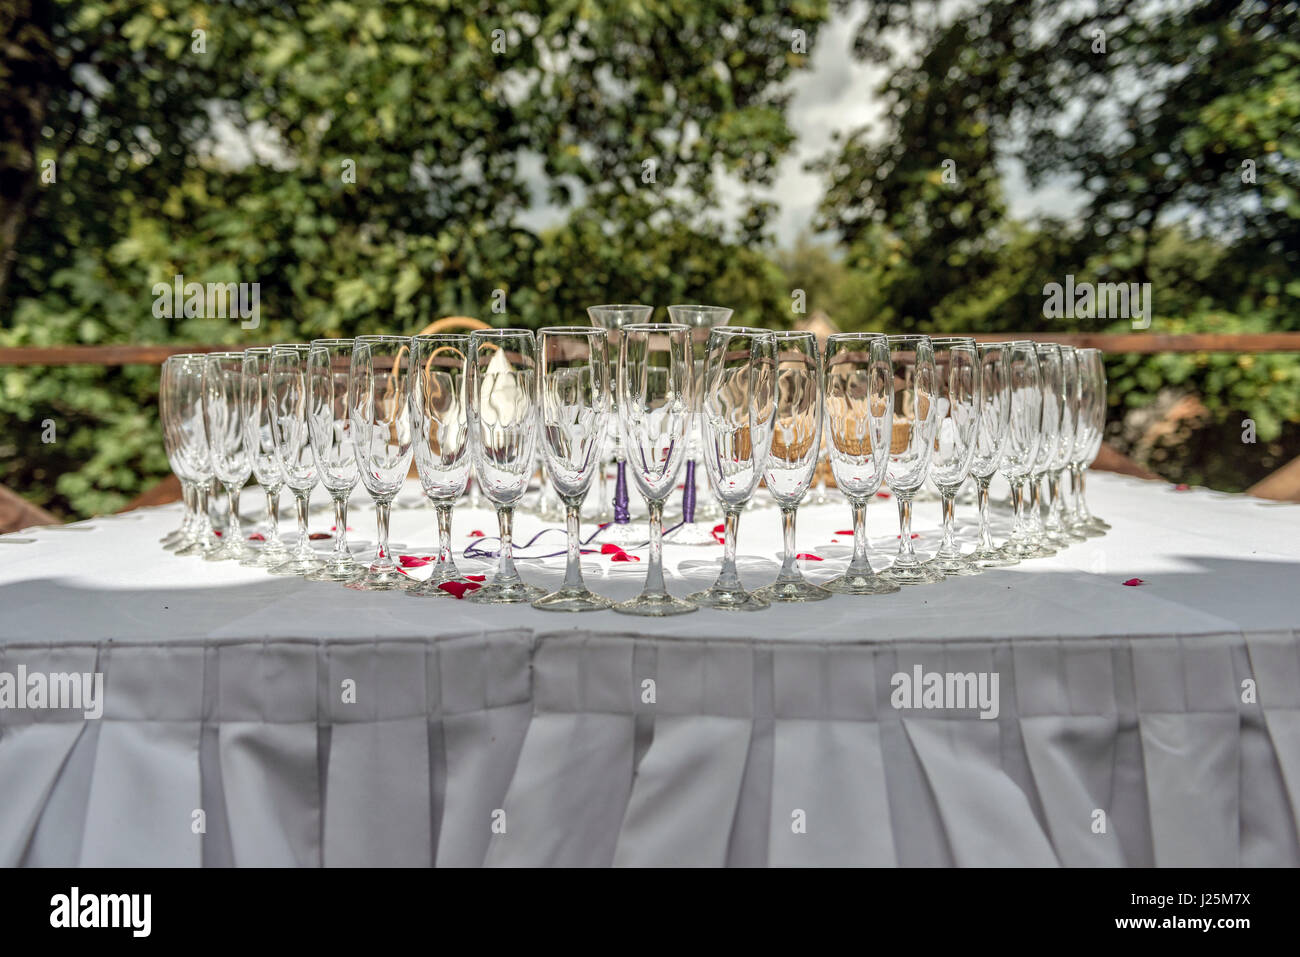 https://c8.alamy.com/comp/J25M7X/wedding-table-decoration-heart-shaped-arranged-champagne-glasses-J25M7X.jpg